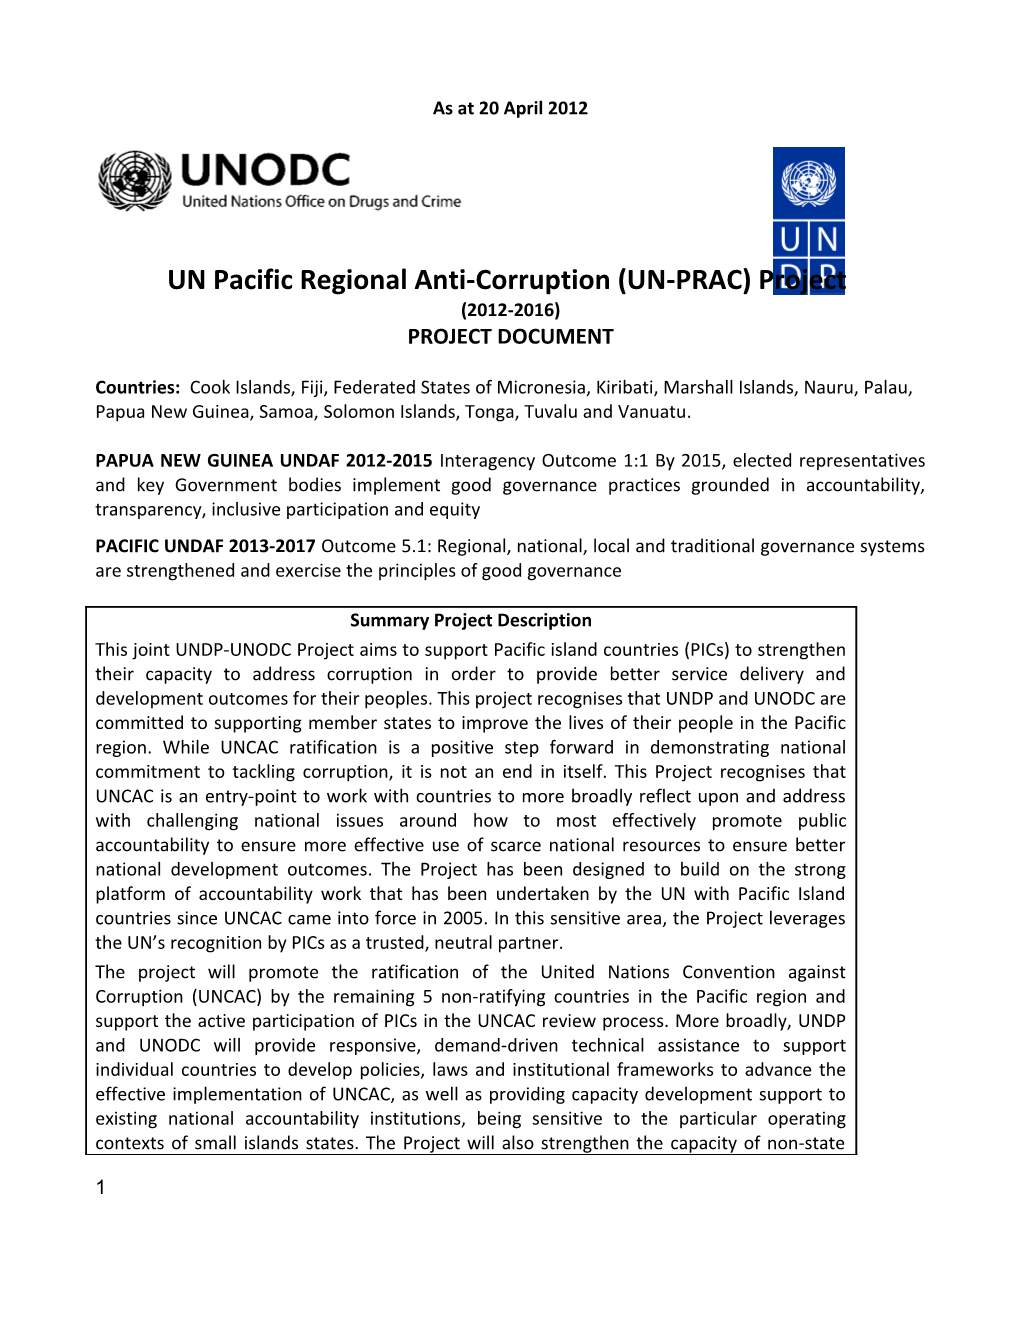 UN Pacific Regional Anti-Corruption (UN-PRAC) Project